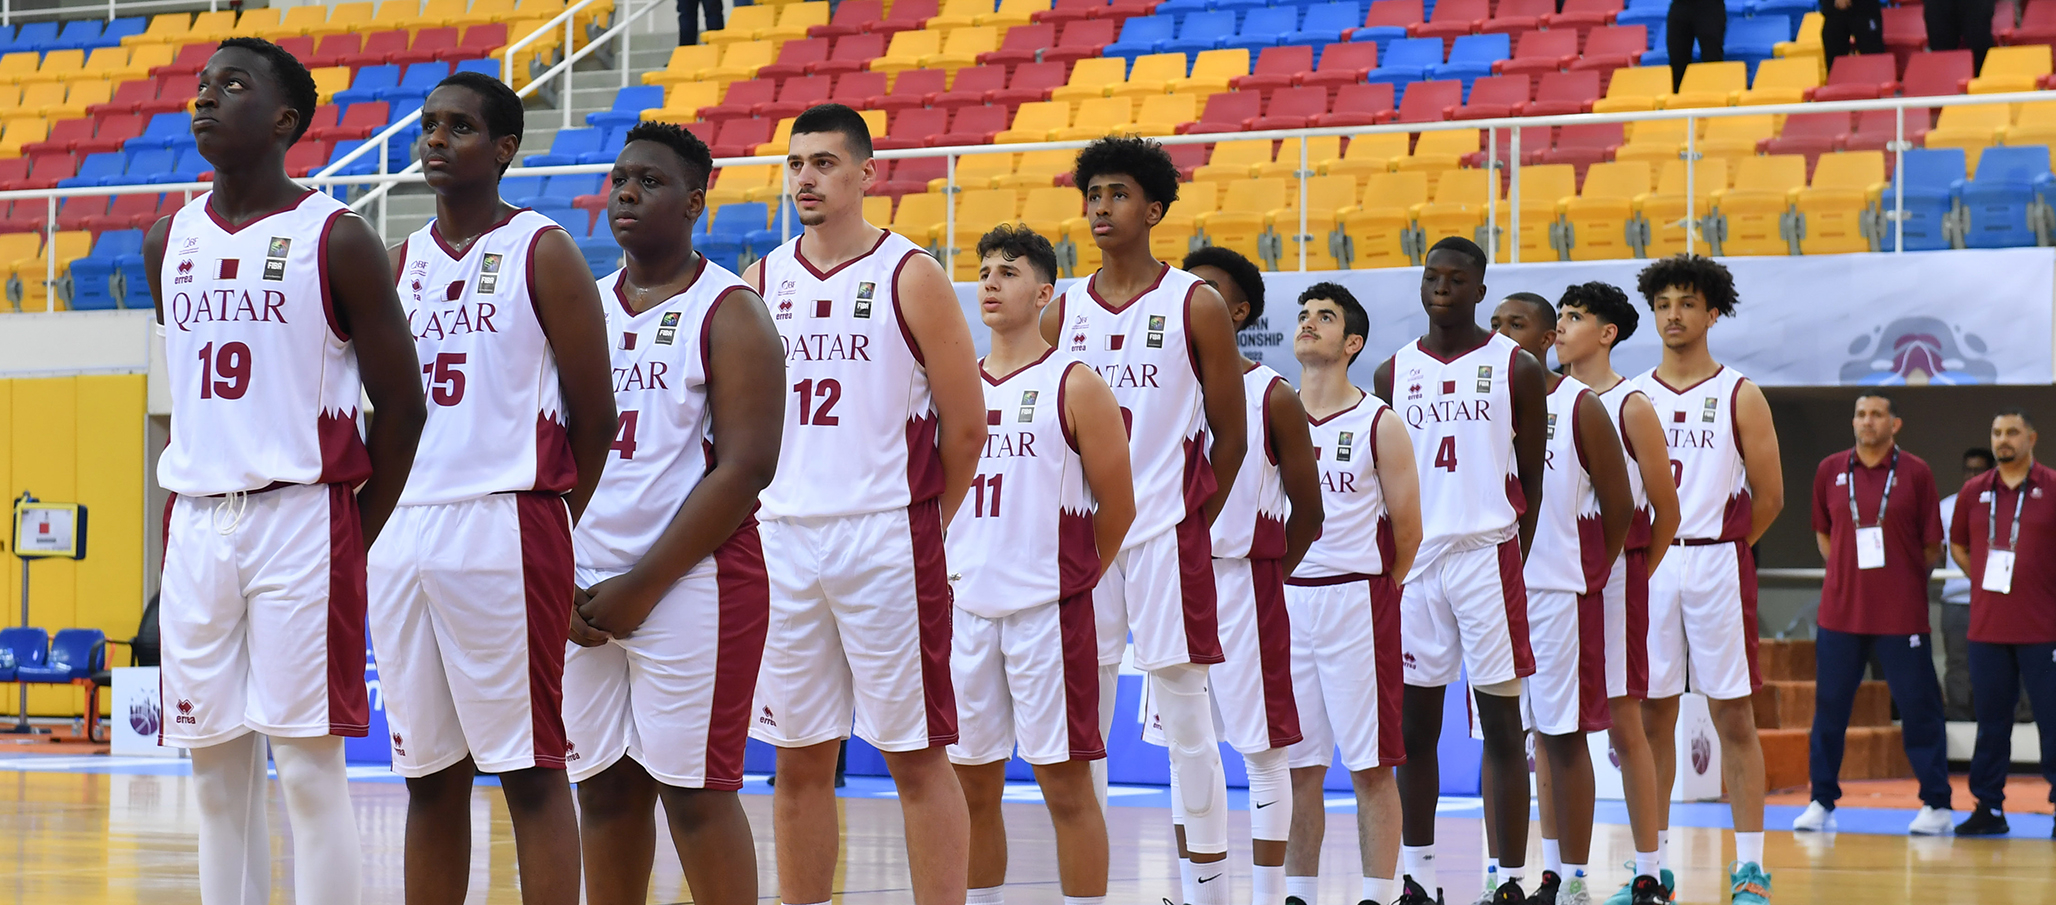 Qatar Junior basketball team